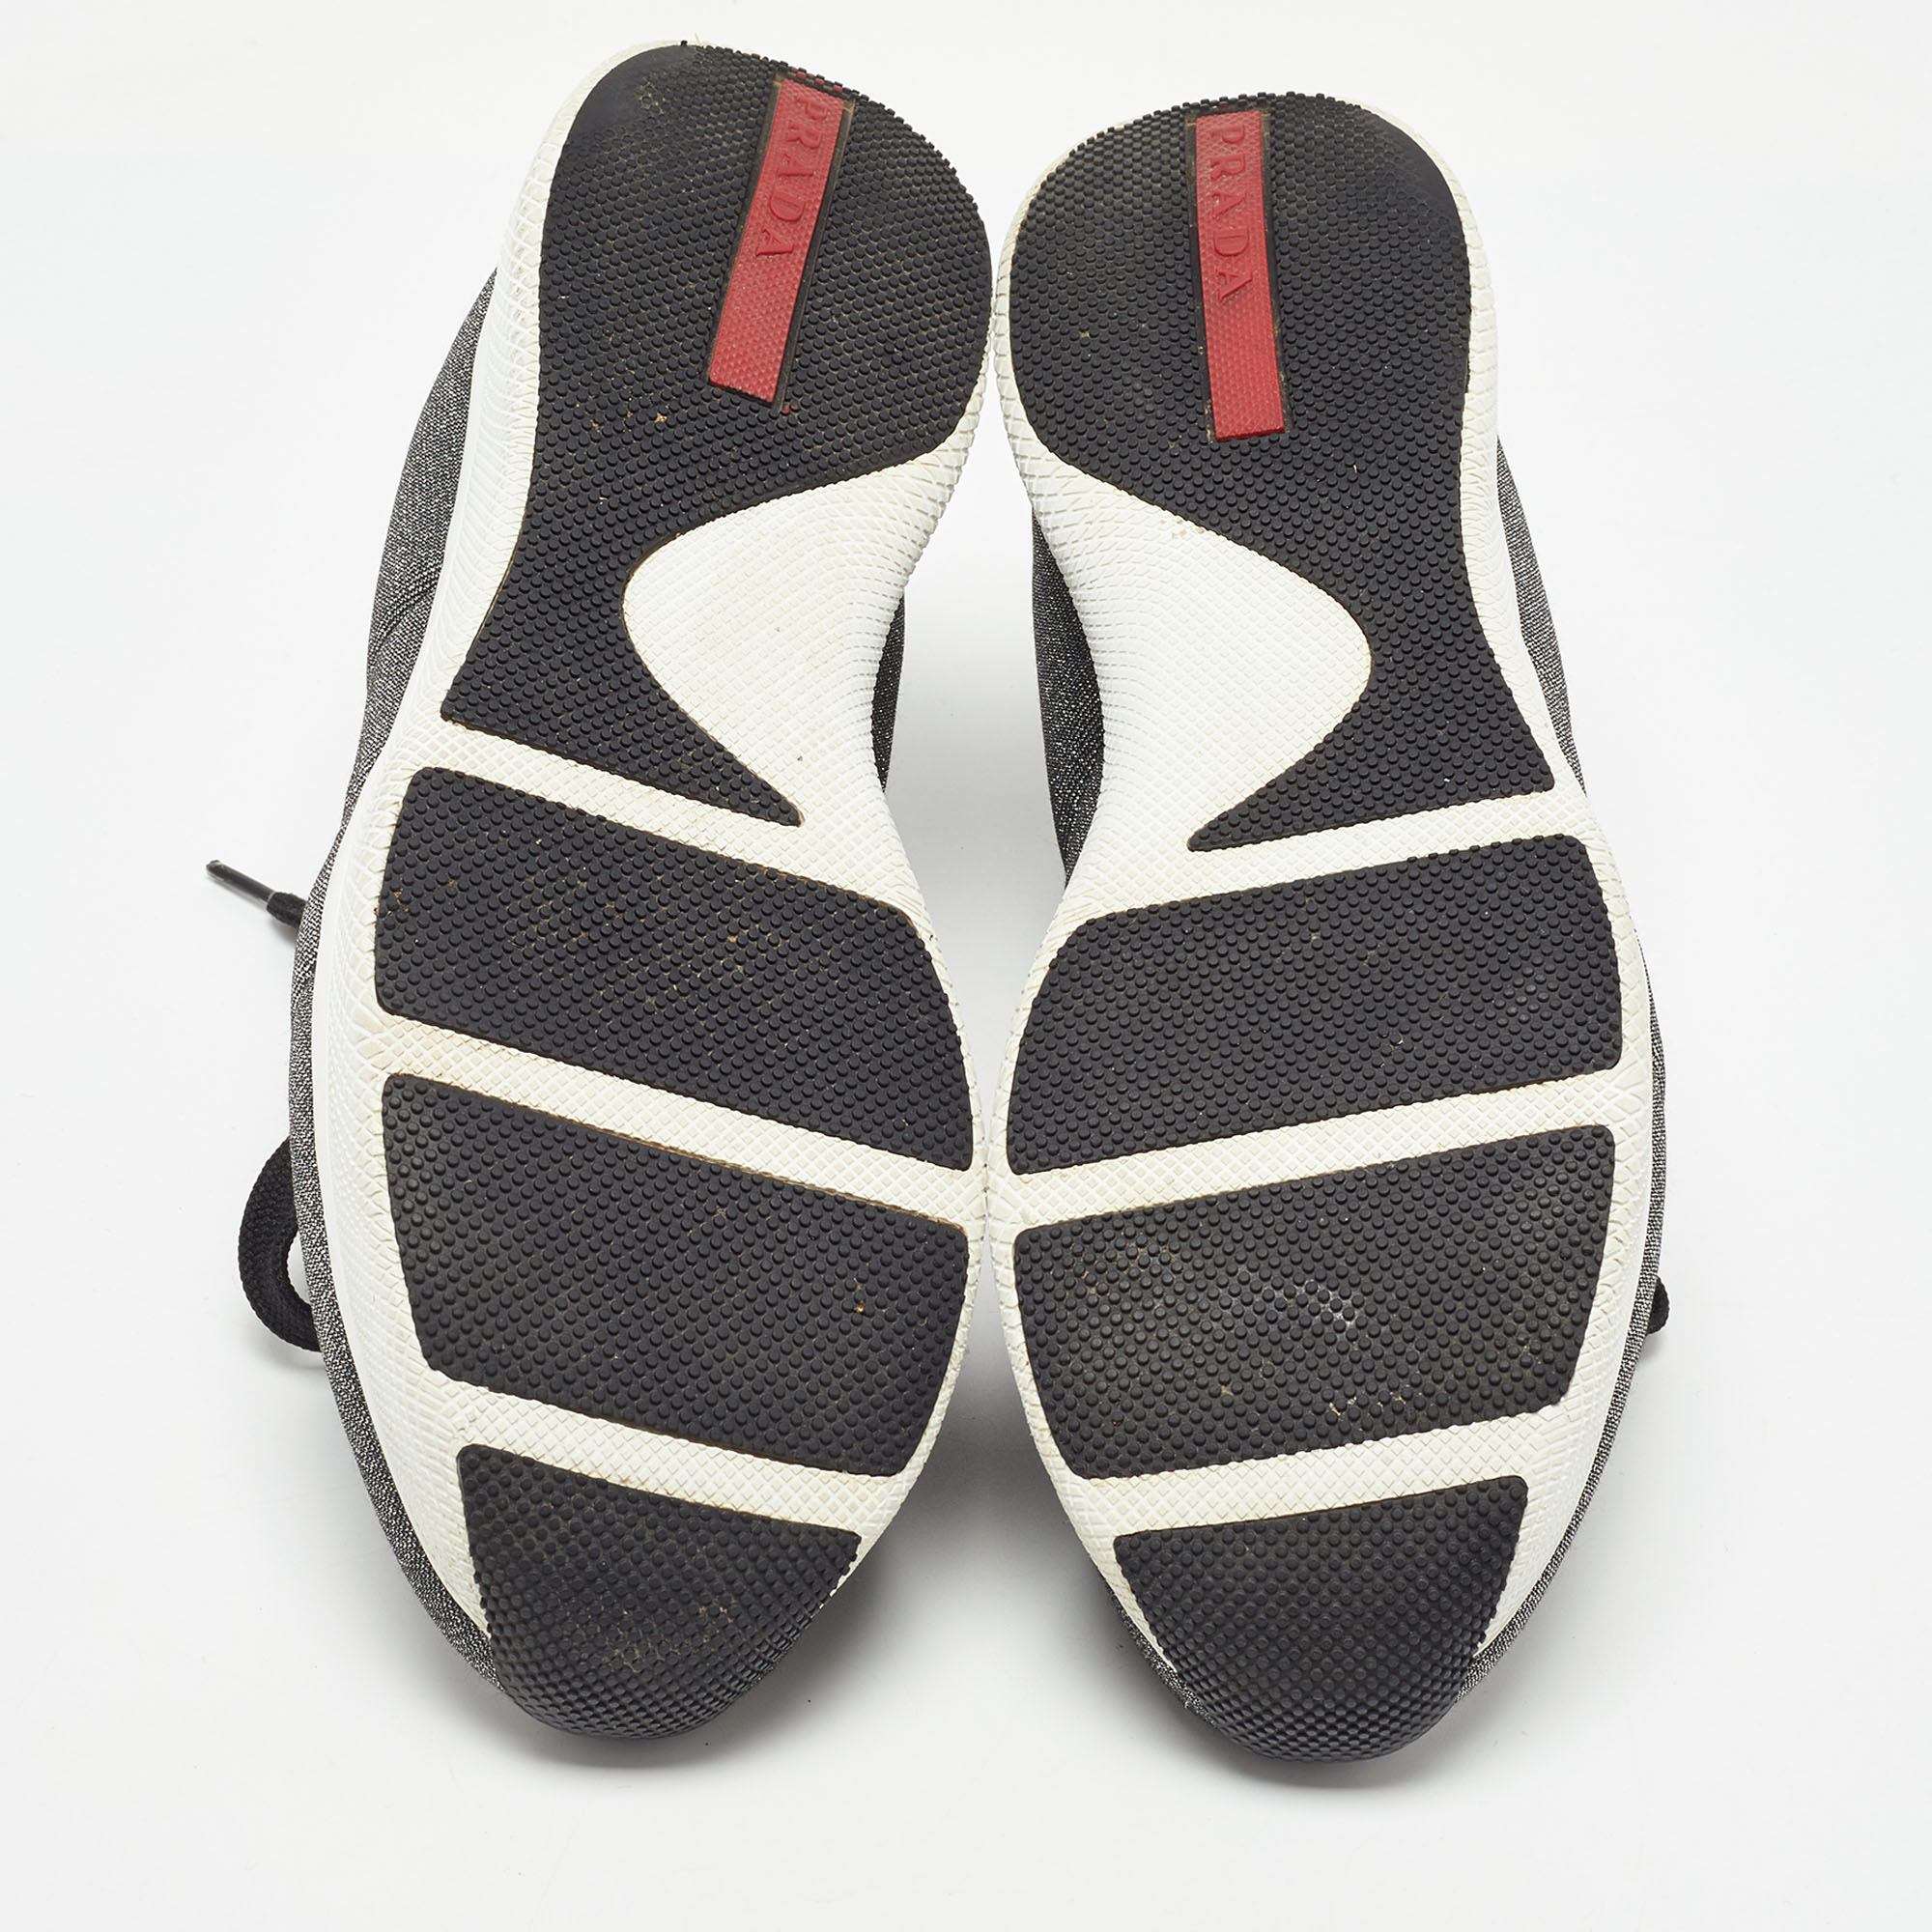 Prada Sport Two Tone Lurex Fabric Low Top Sneakers Size 39